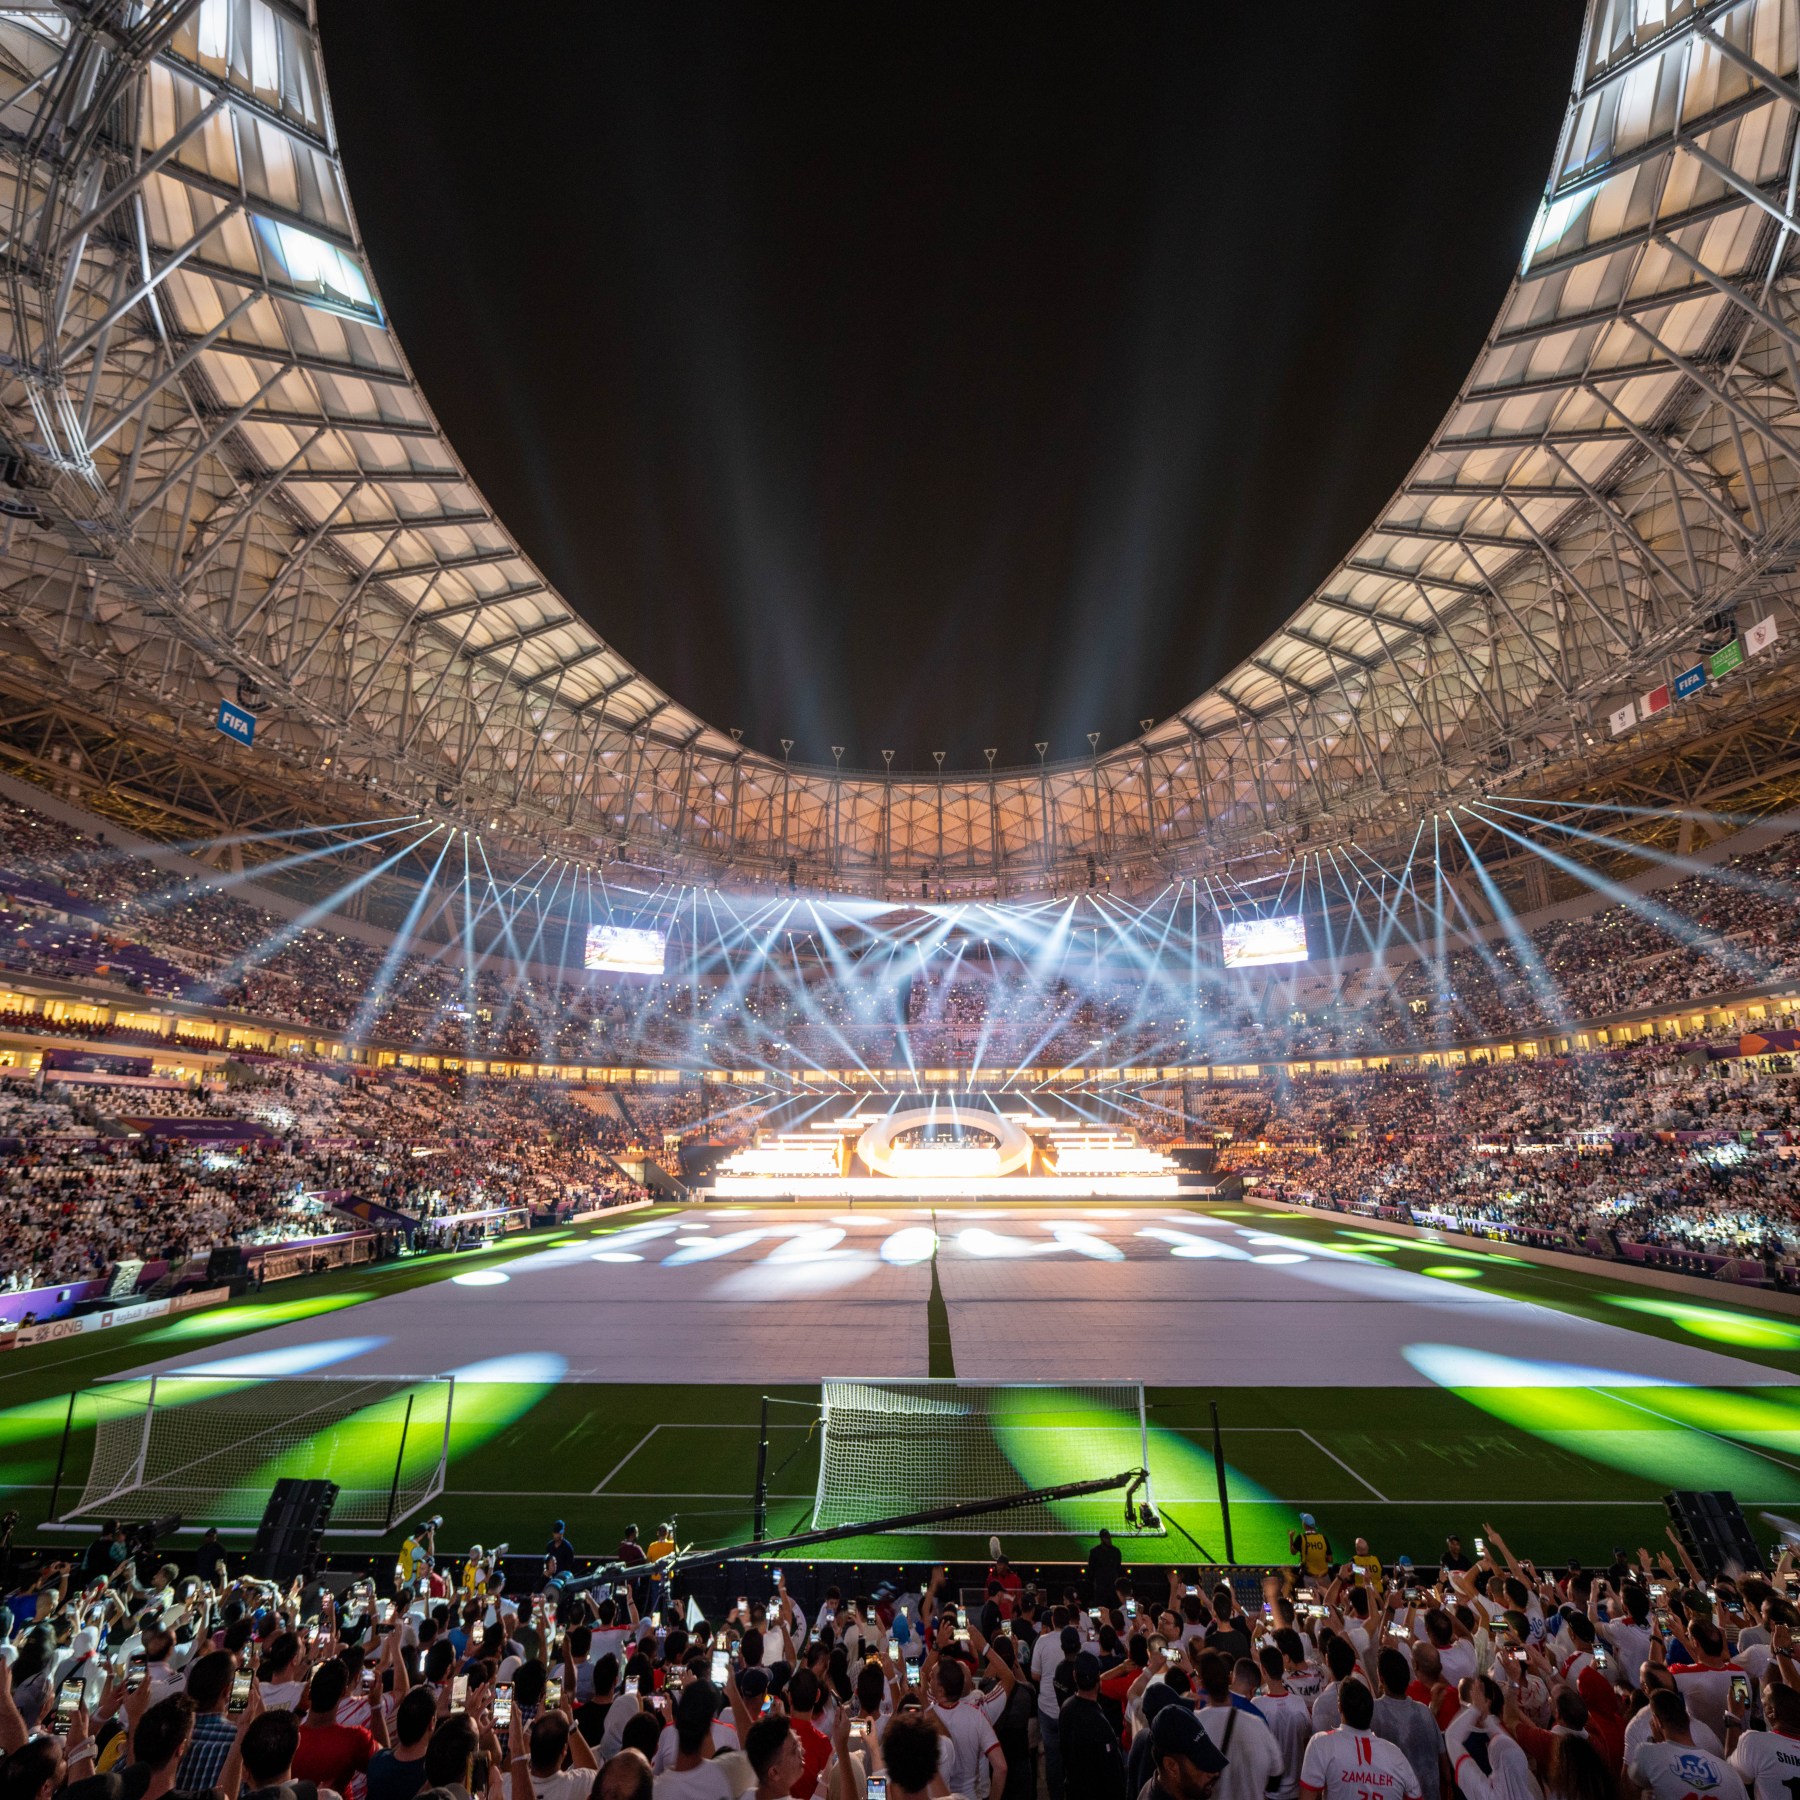 Final round of FIFA World Cup ticket sales starts today - Qatar World Cup 2022 News - Al Jazeera